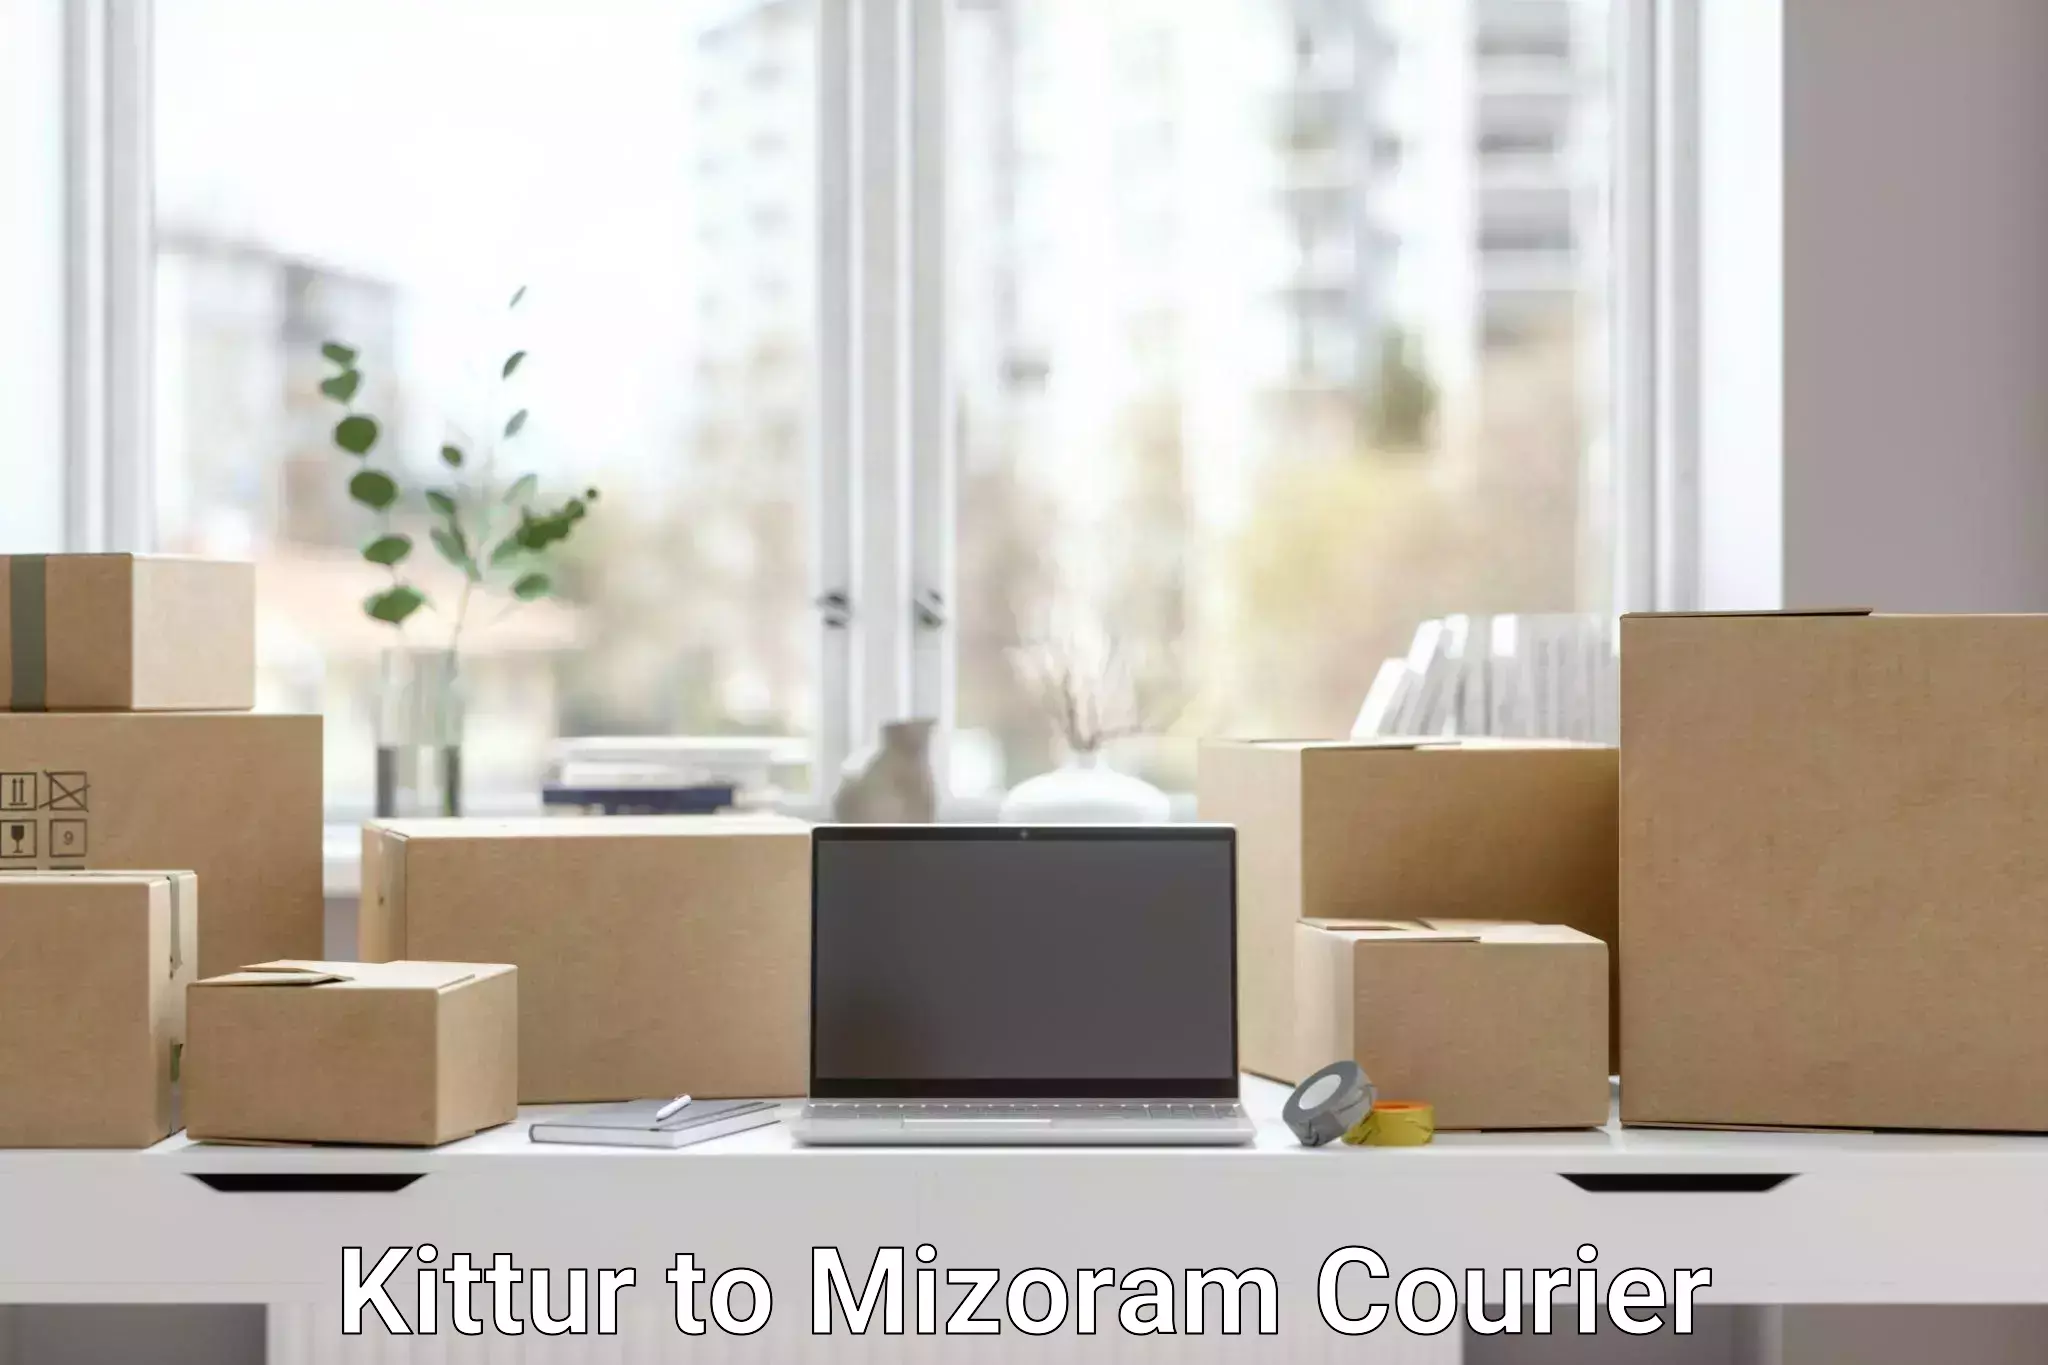 Full-service courier options Kittur to Mizoram